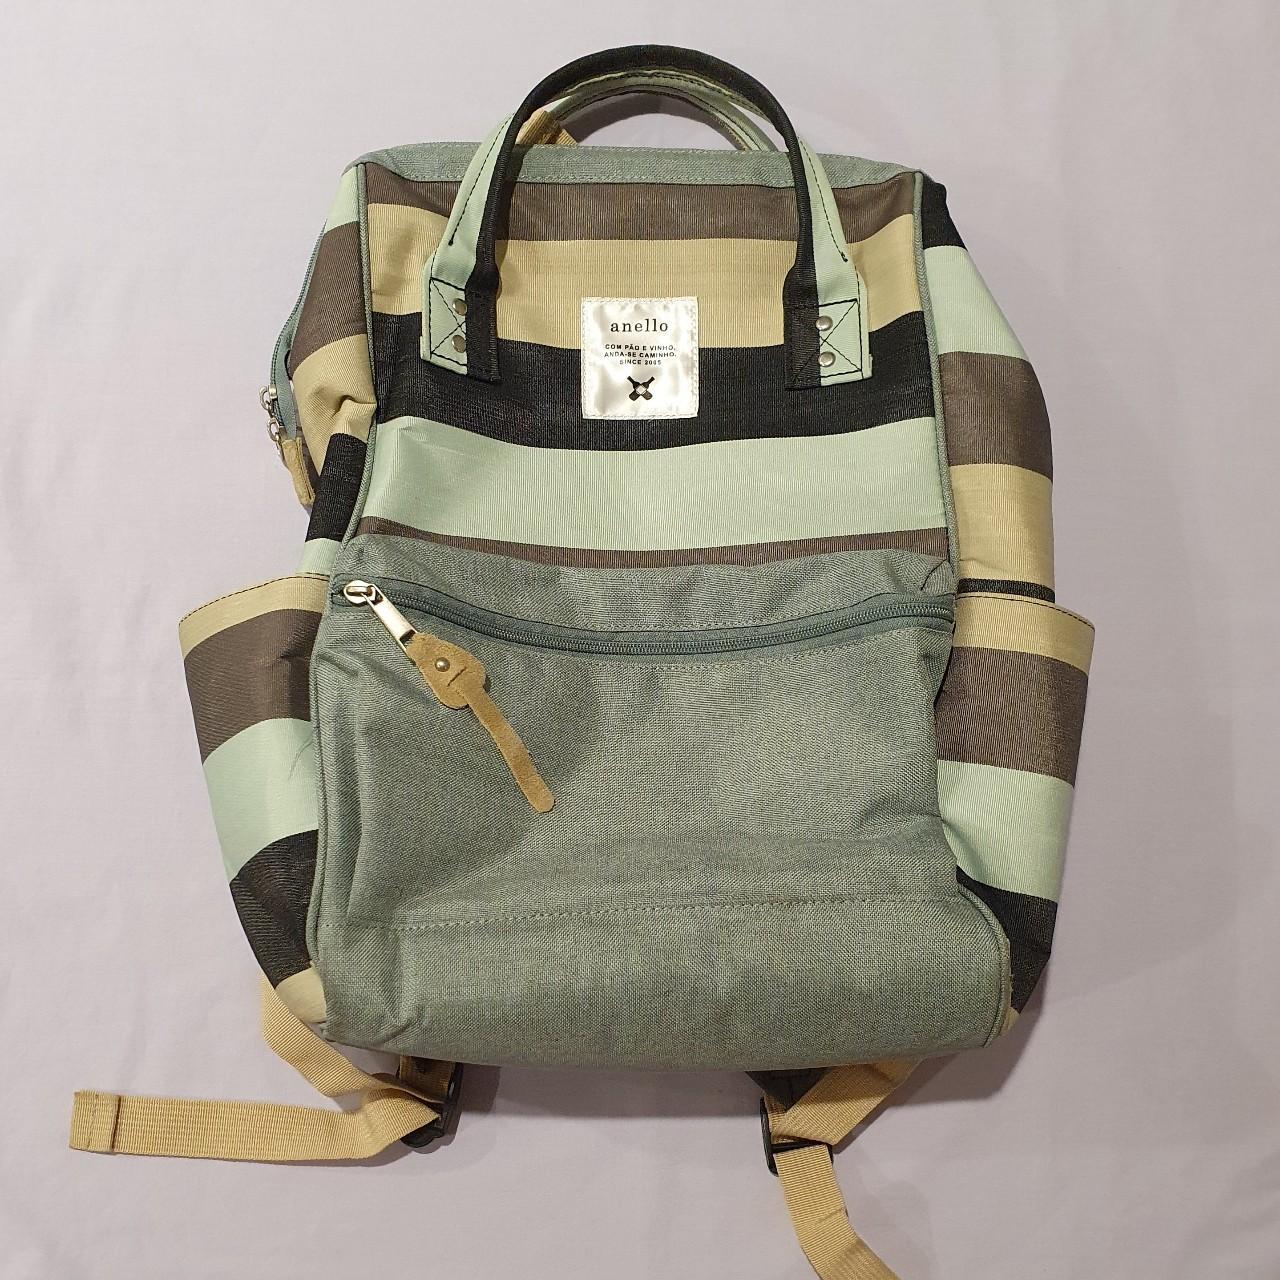 anello backpack  Backpacks, Bags designer, Bags